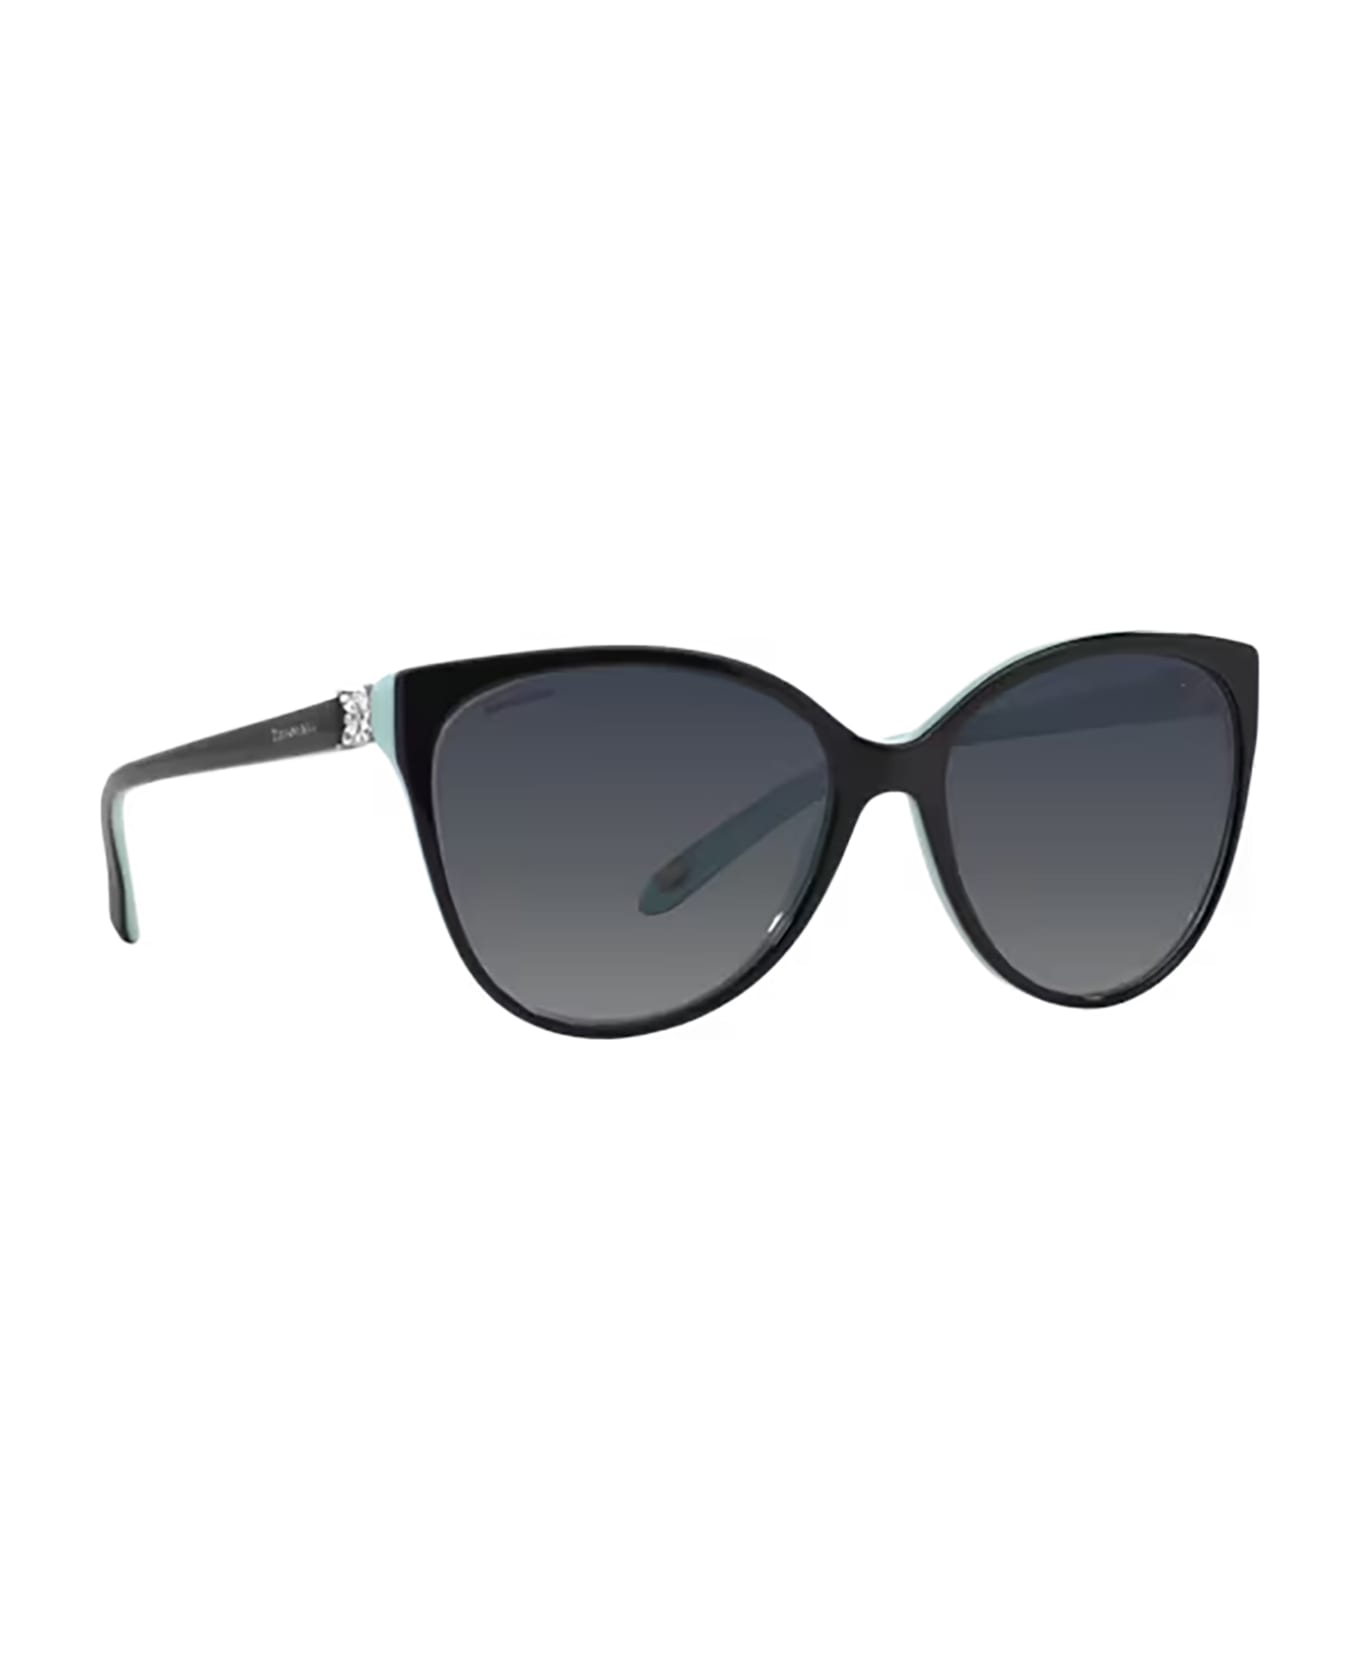 Tiffany & Co. Tf4089b Black On Tiffany Blue Sunglasses - Black on tiffany blue